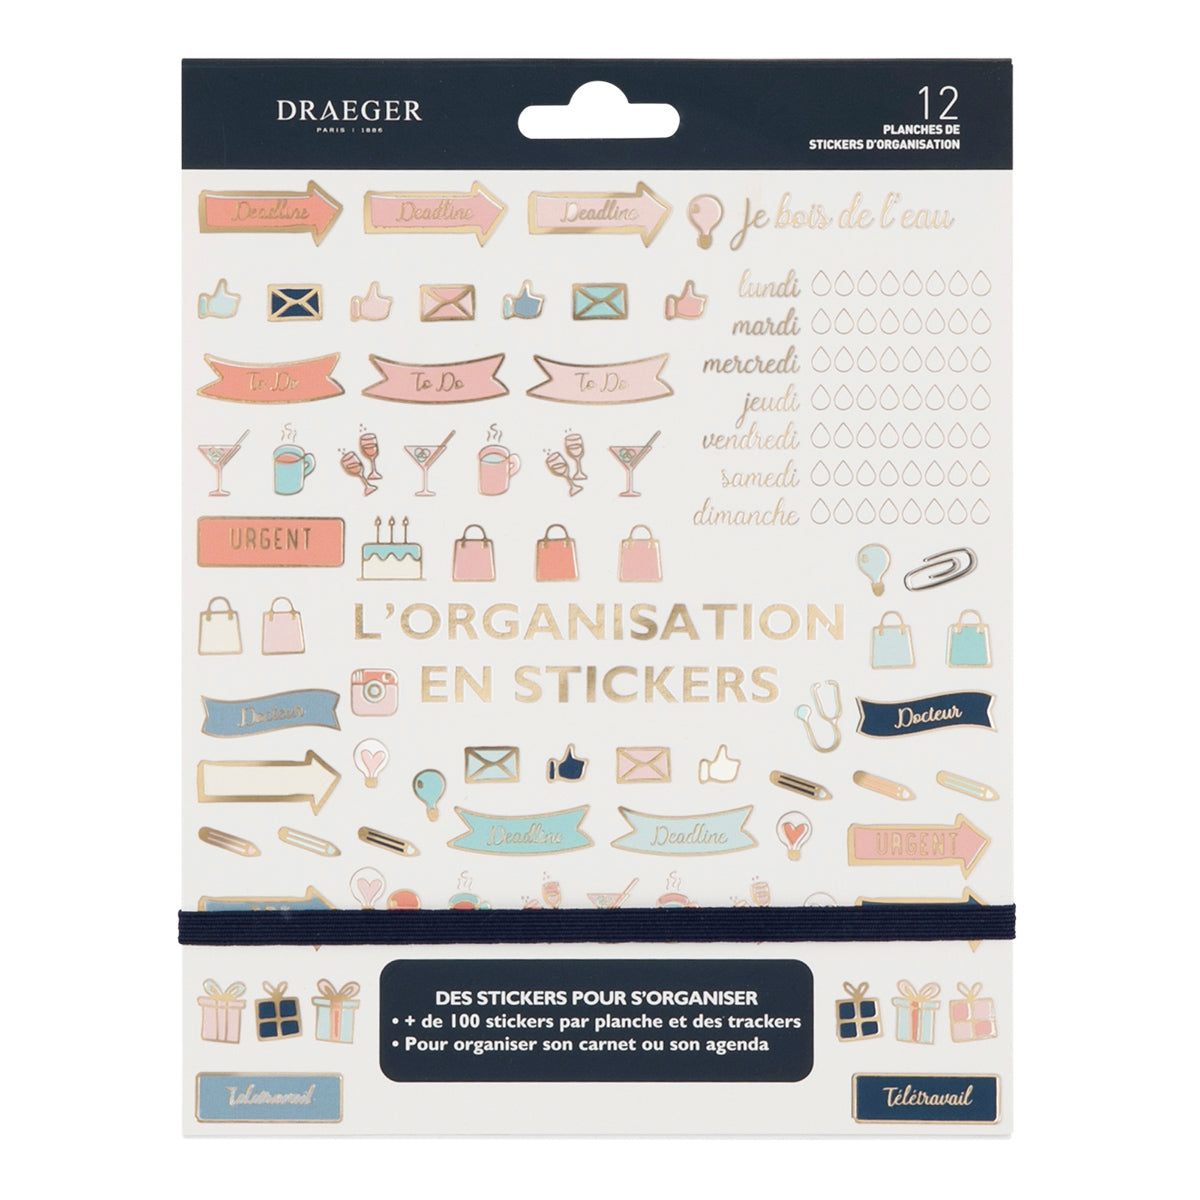 Stickers organisation - 12 planches